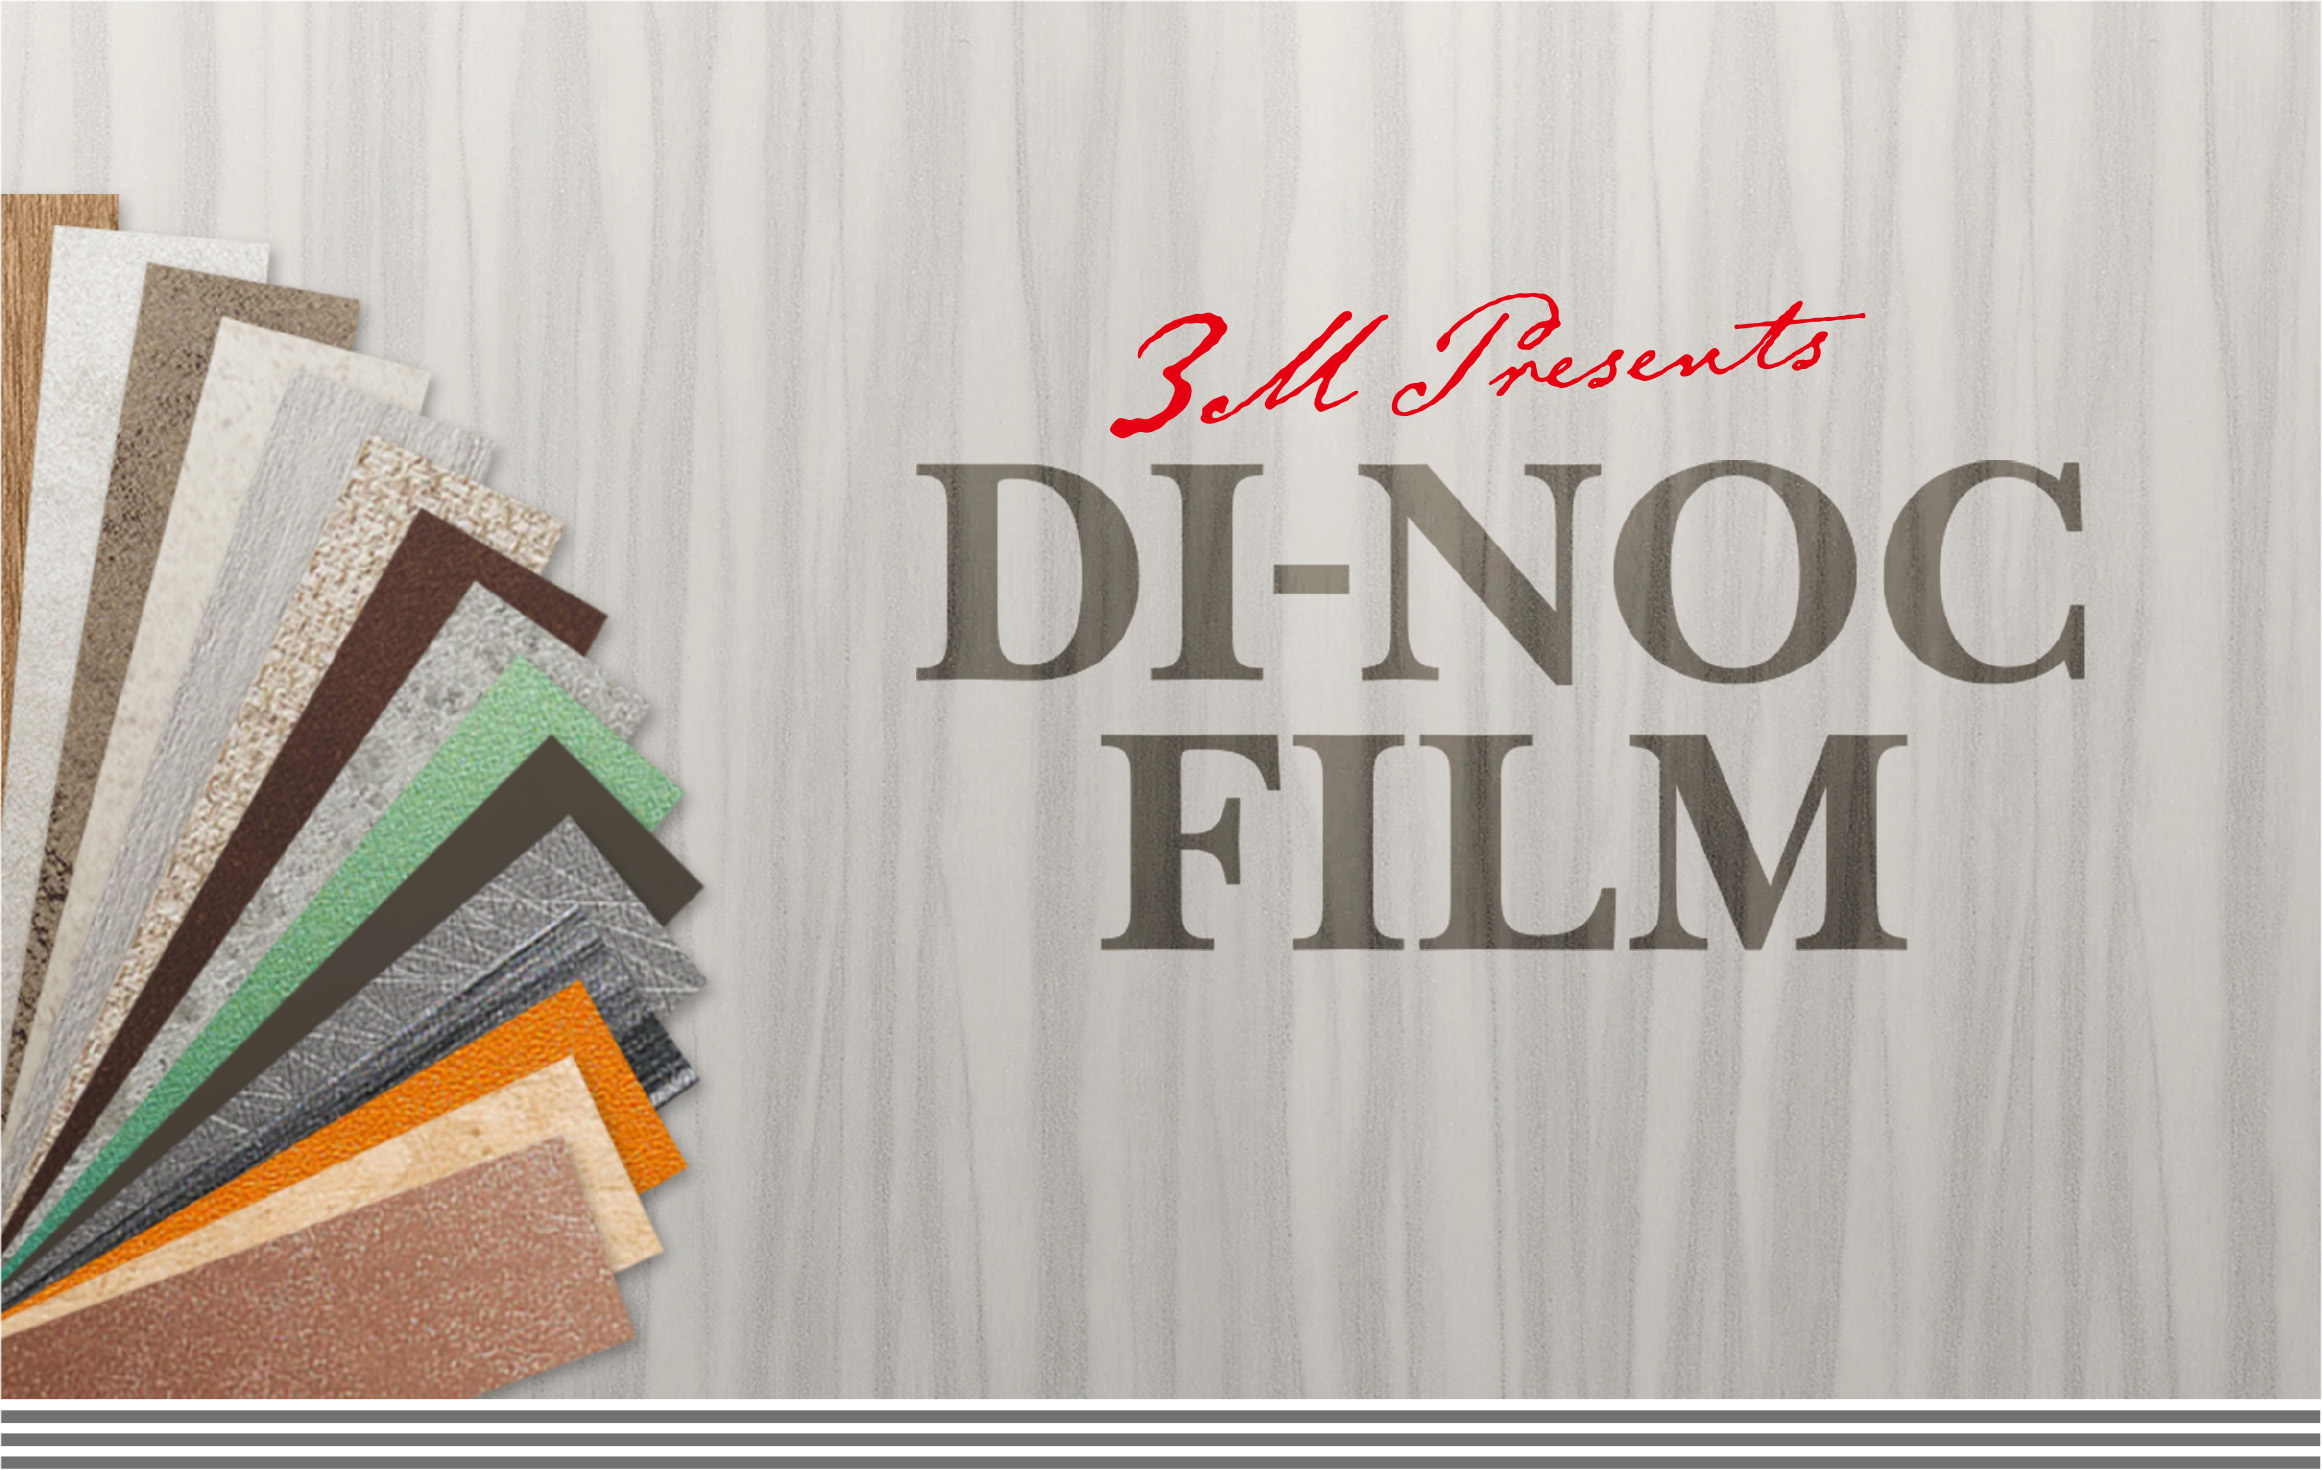 3M presents DI-N0C FILM